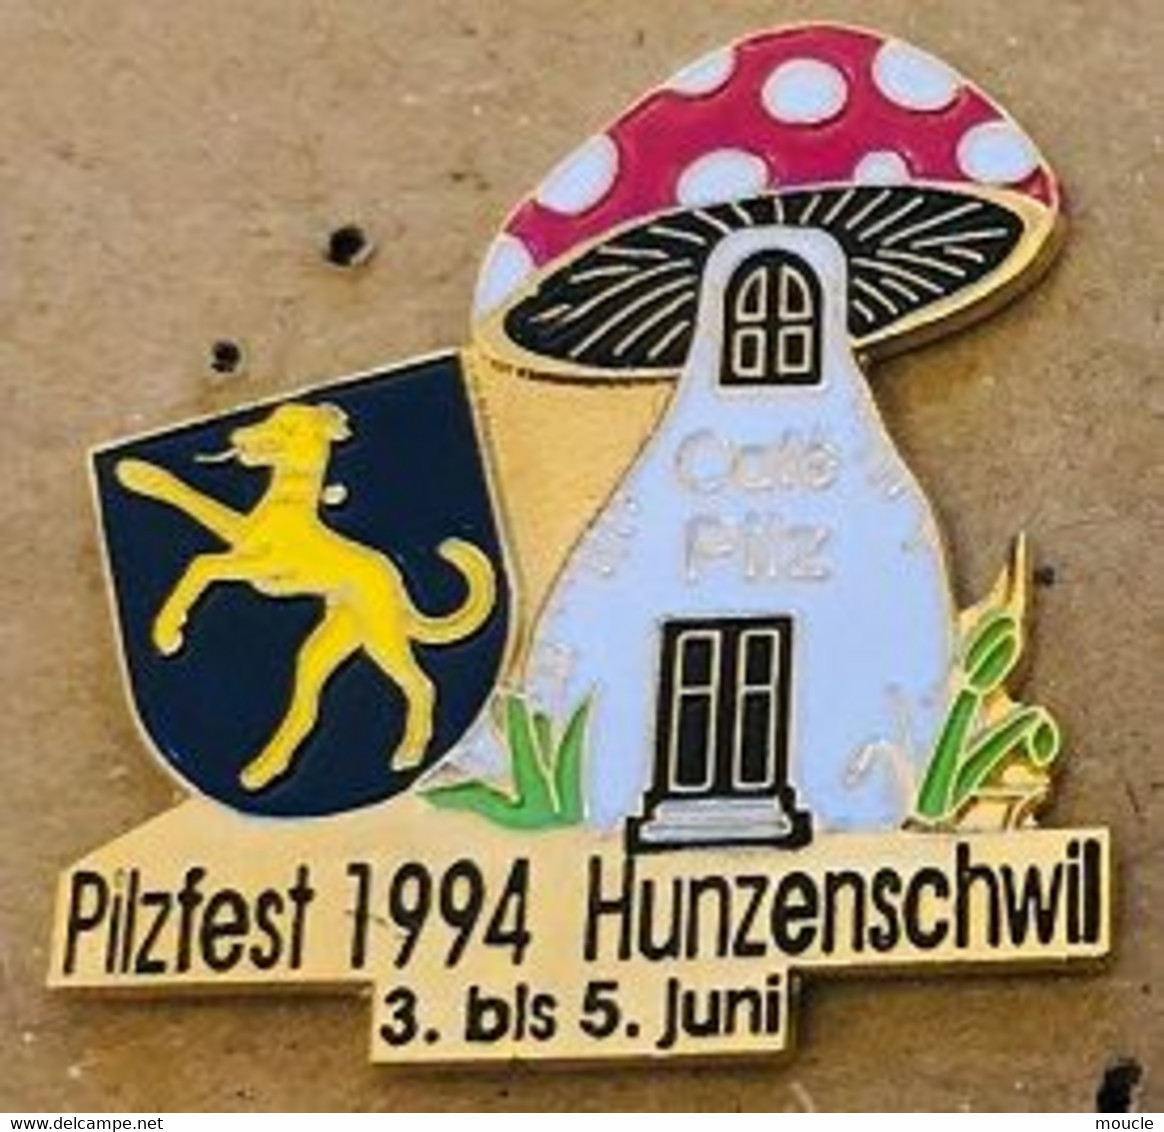 CAFE PILZ - PILZFEST 1994 - HUNZENSCHWIL - 3 BIS 5 JUNI - SCHWEIZ - FETE DU CHAMPIGNON - SUISSE - MUSHROOM -   (31) - Alimentation